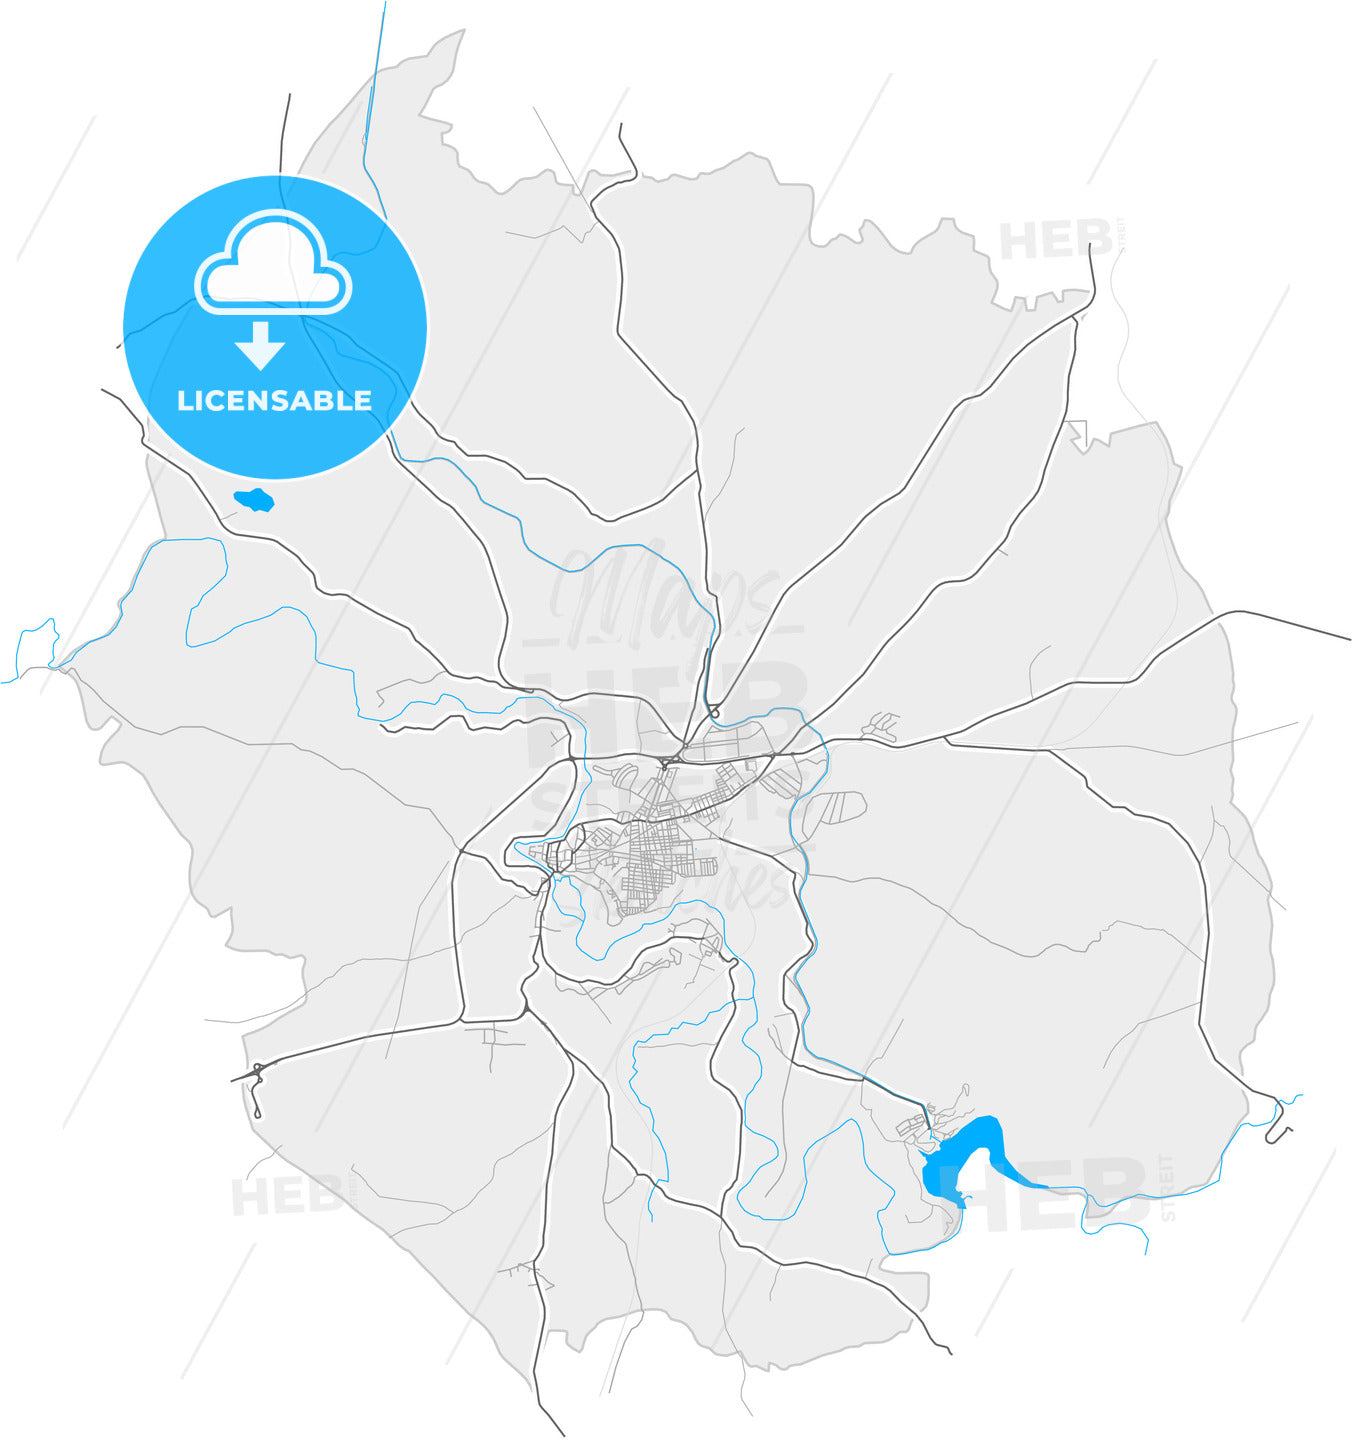 Puente-Genil, Córdoba, Spain, high quality vector map